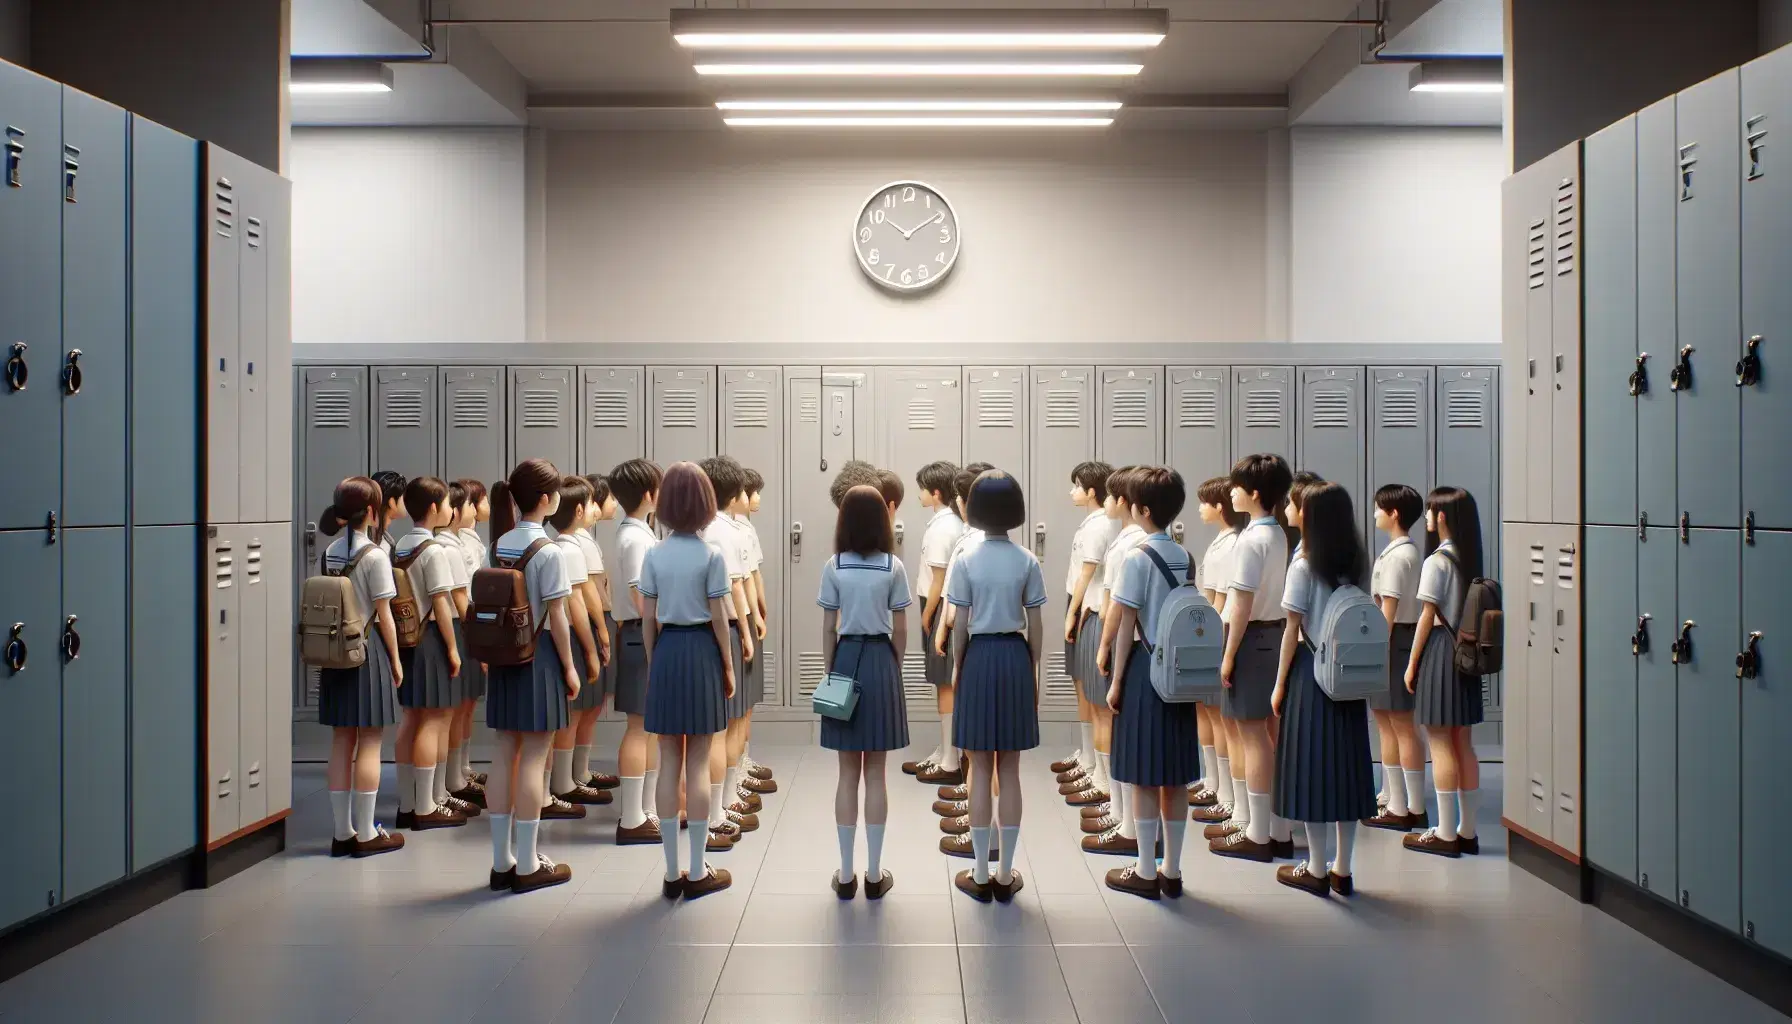 Estudiantes uniformados con camisas blancas y pantalones o faldas azul oscuro escuchan atentamente frente a casilleros escolares grises.